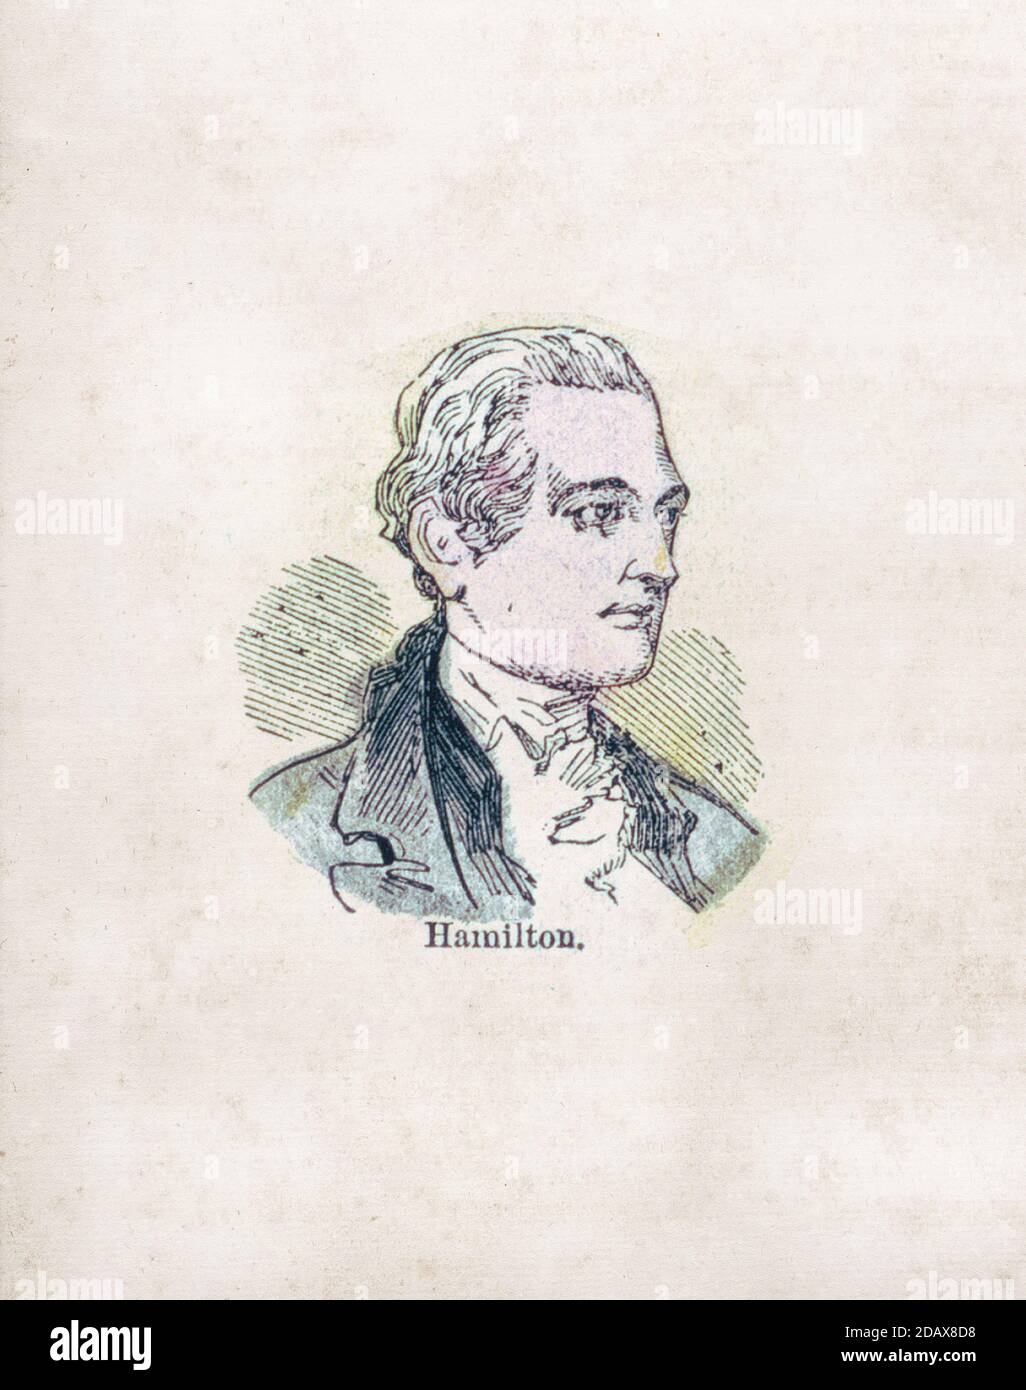 Engraving of Alexander Hamilton. Alexander Hamilton (1755 or 1757 – 1804) was an American statesman, politician, legal scholar, military commander, la Stock Photo